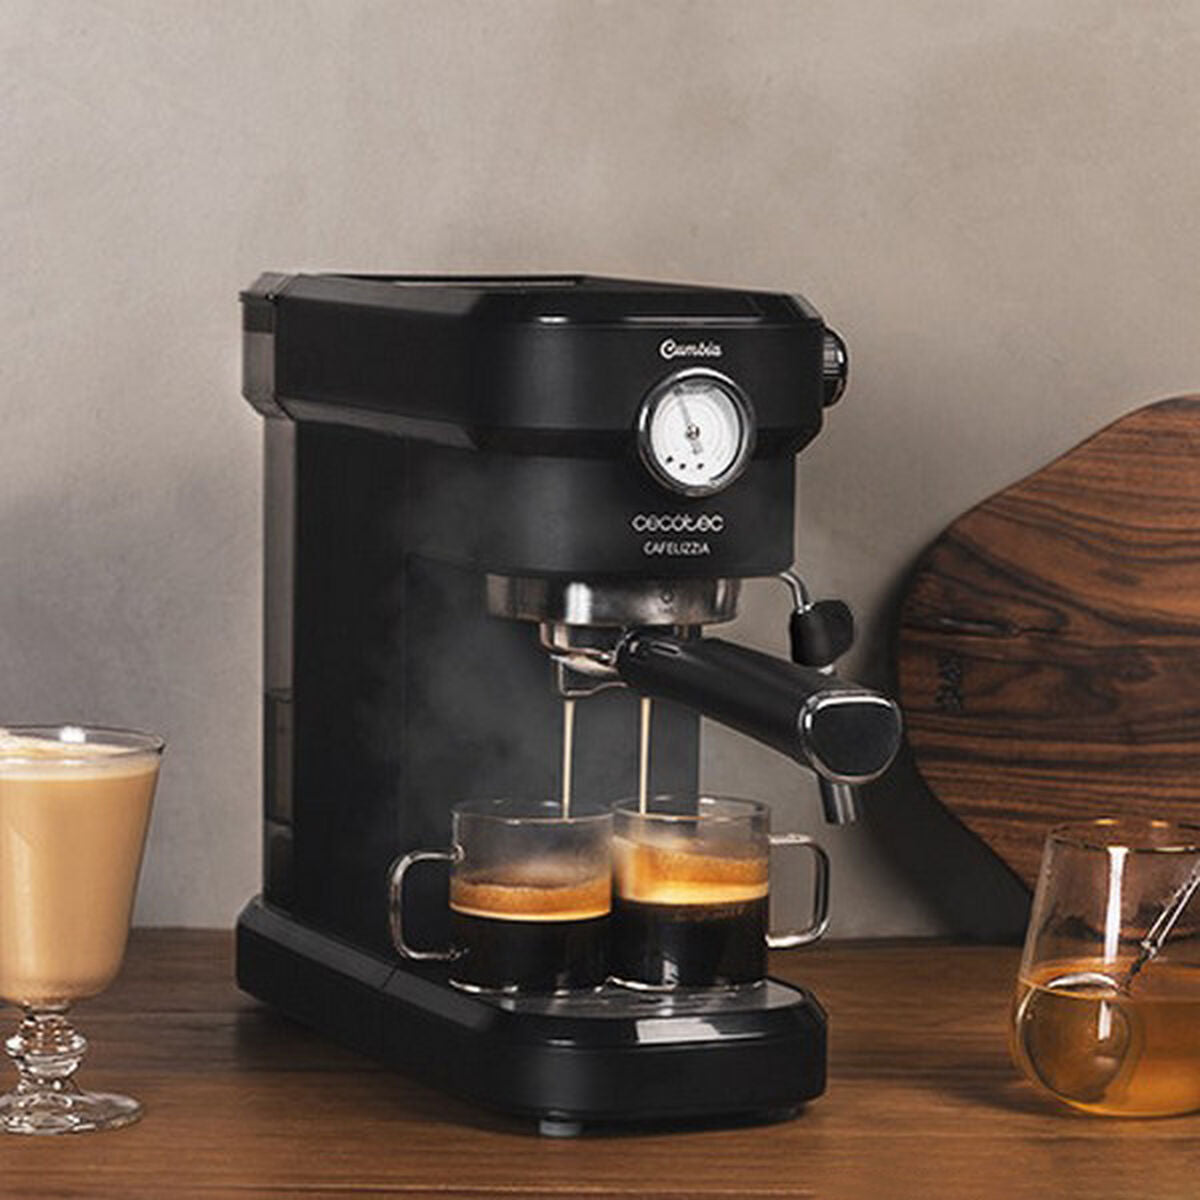 Express Manual Coffee Machine Cecotec CAFELIZZIA 1,2 L 20 bar 1350W Black Steel